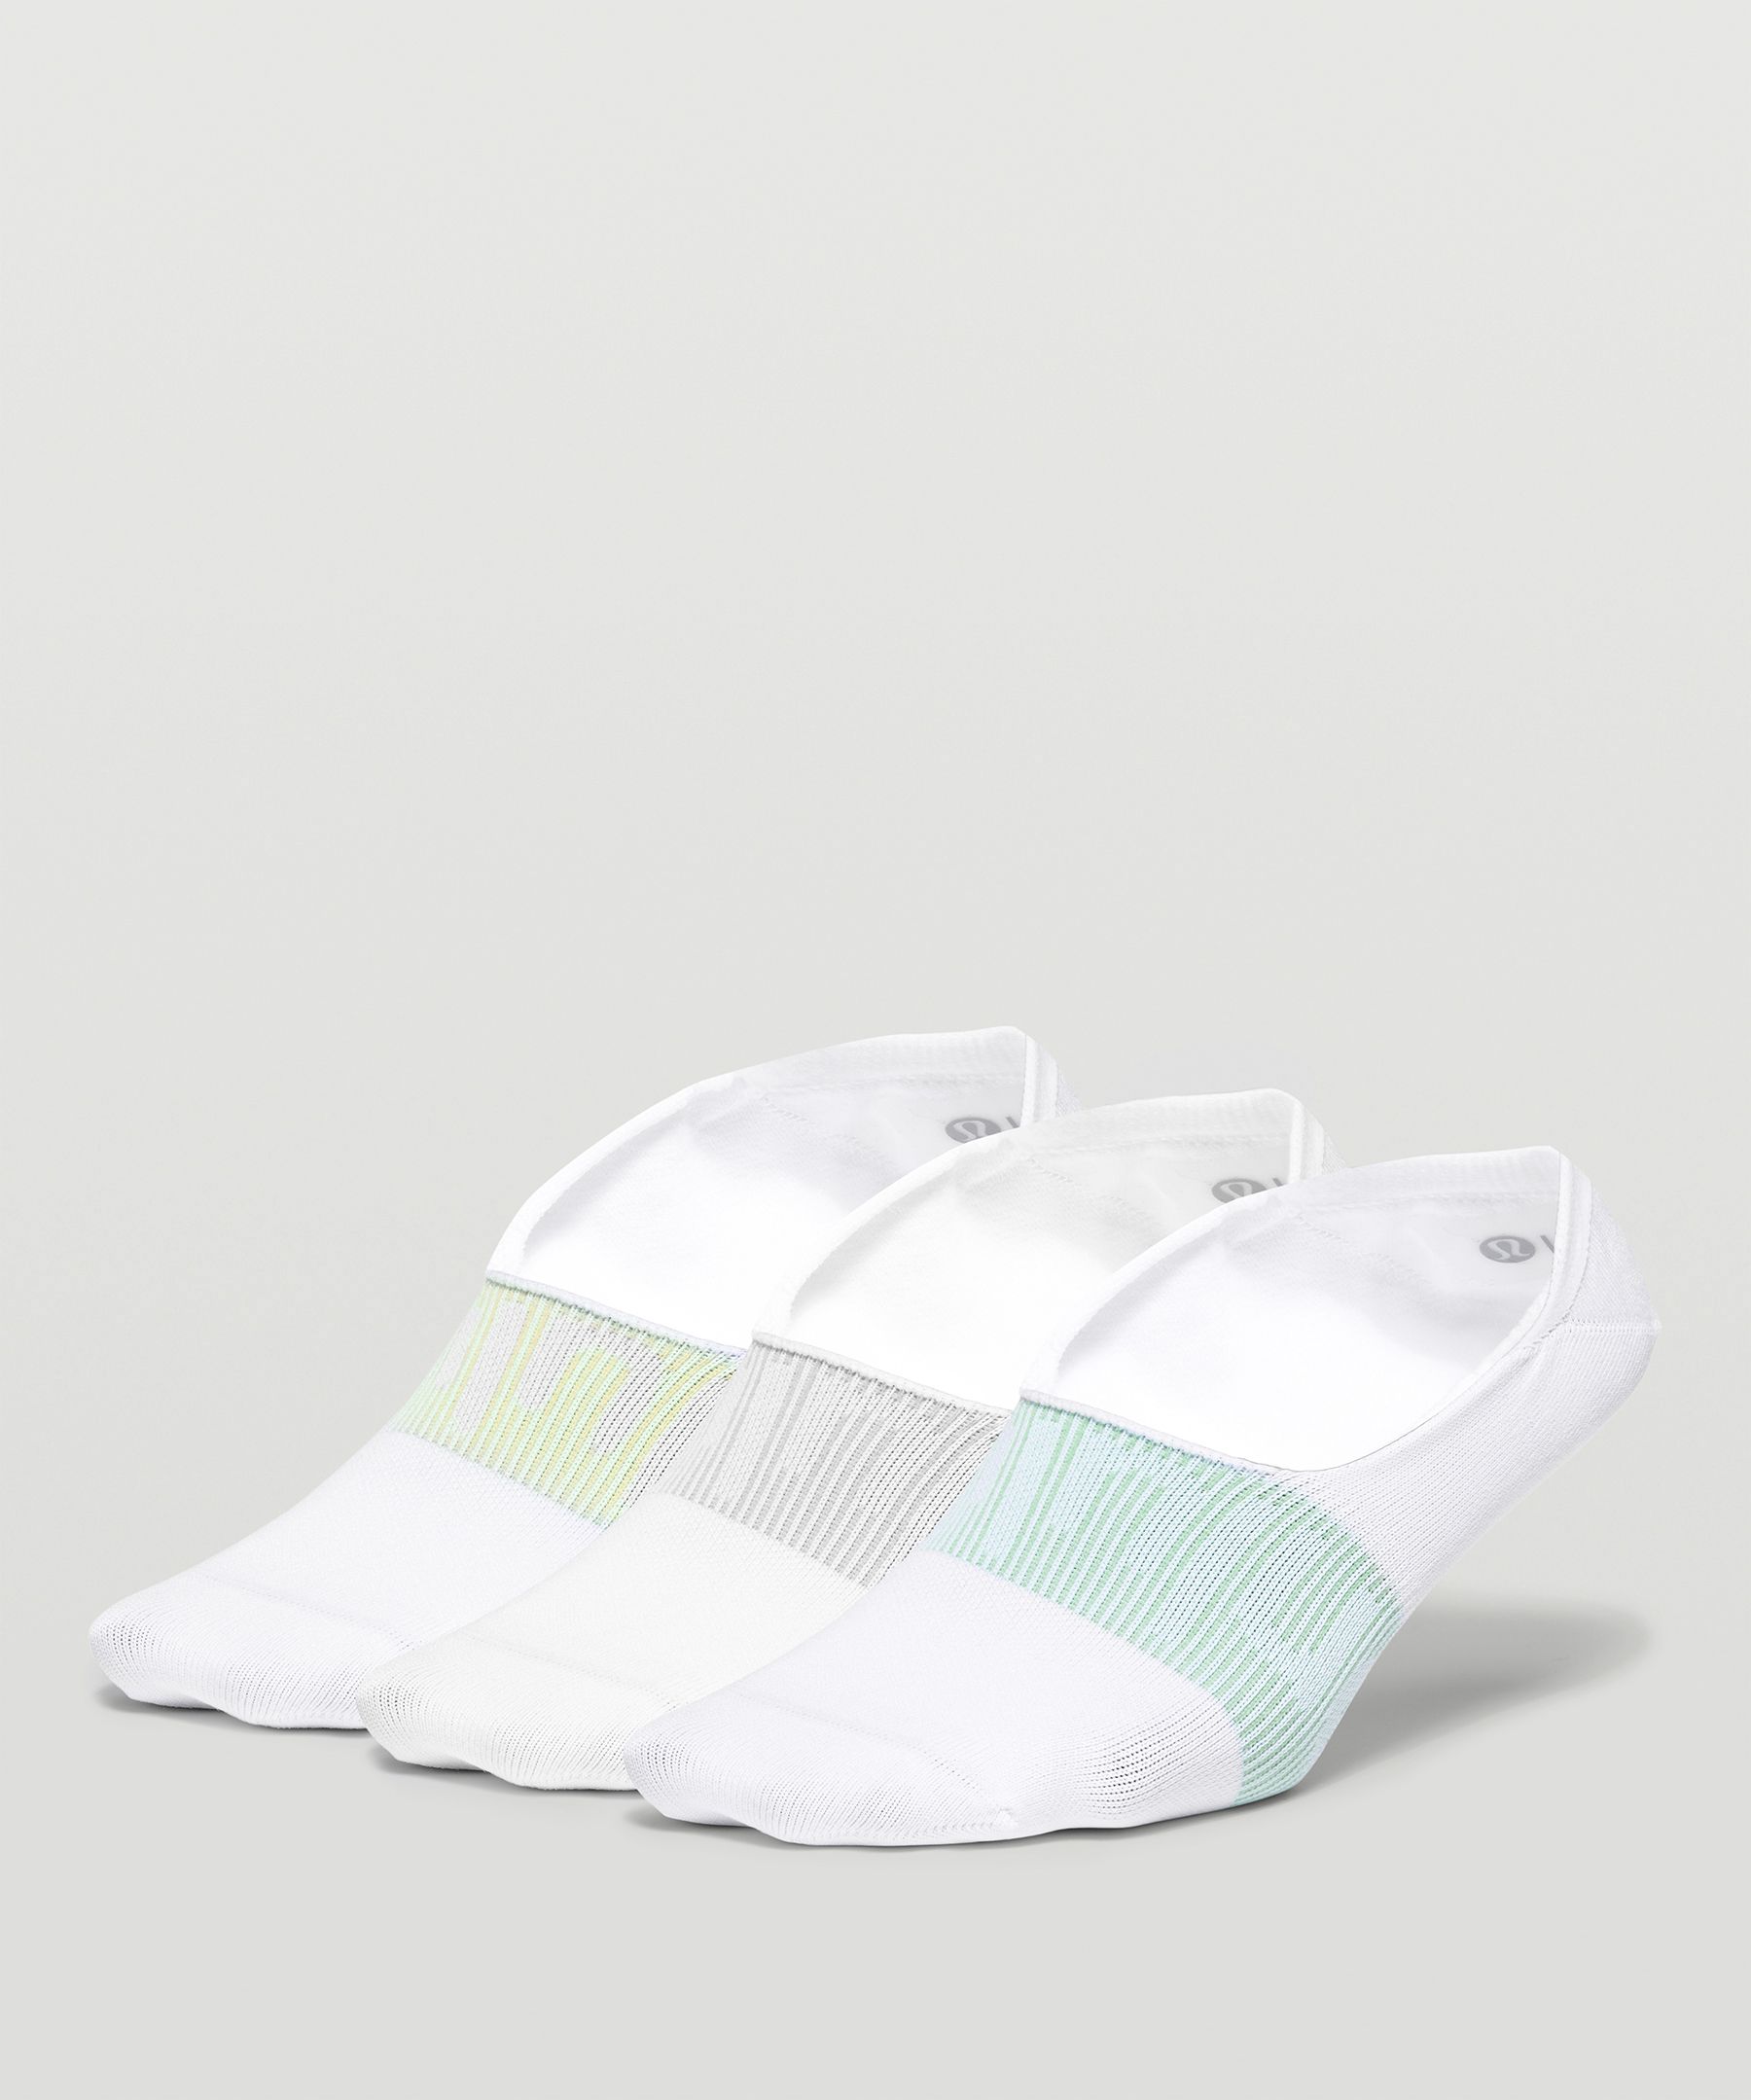 Lululemon Daily Stride No-show Socks 3 Pack In White/wild Mint/crispin Green